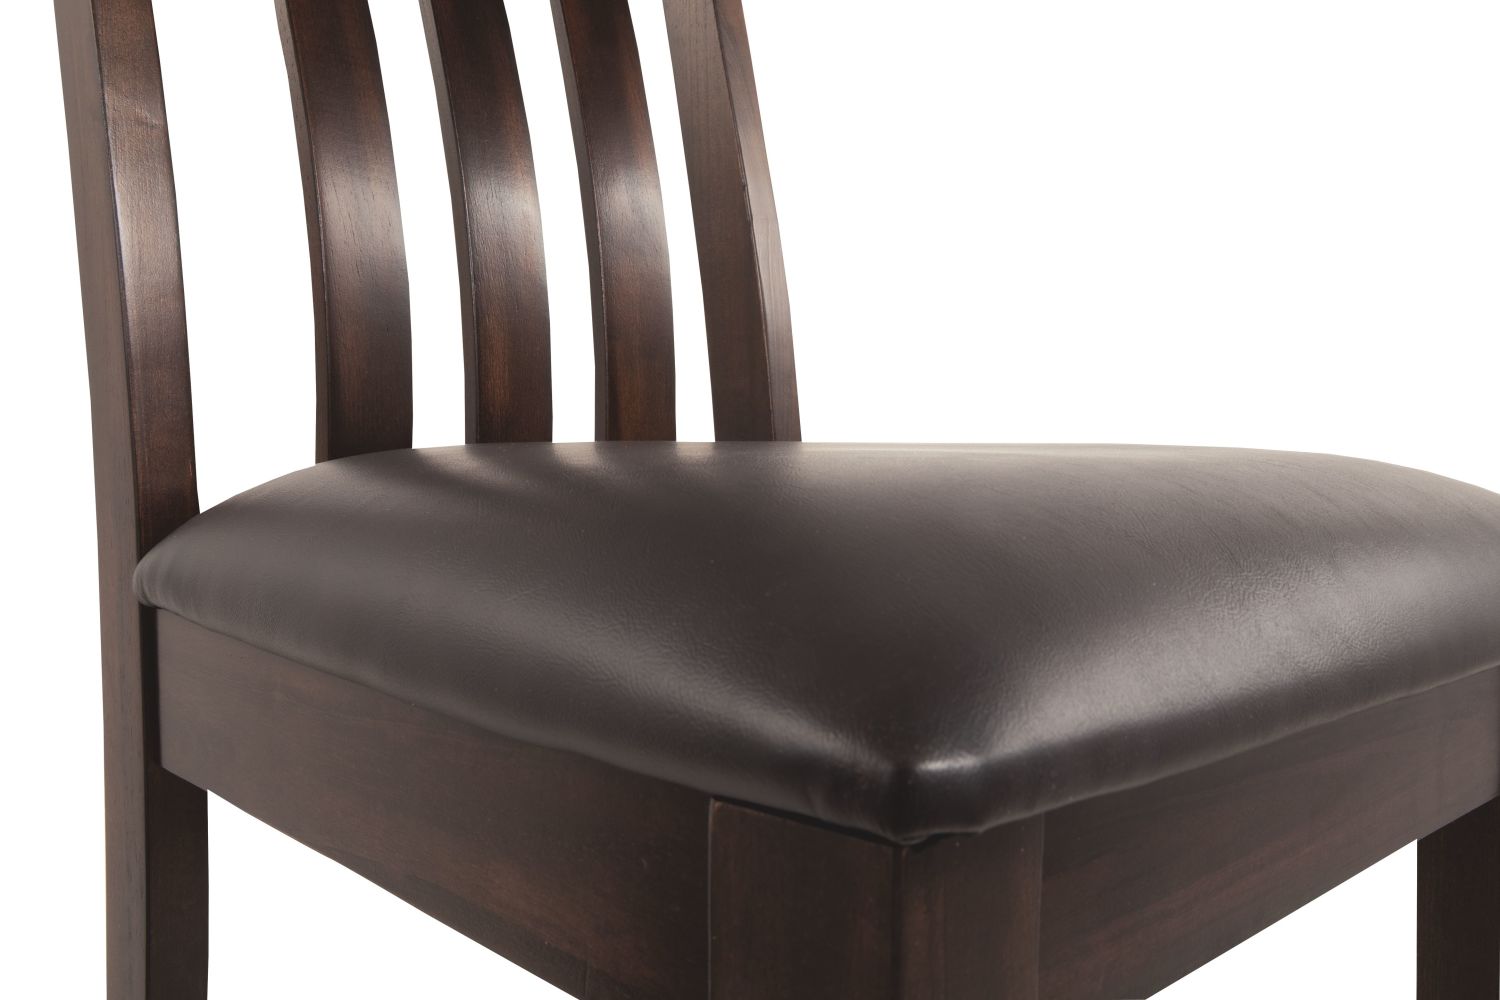 Haddigan – Dark Brown – Dining Uph Side Chair (Set of 2) D596-01